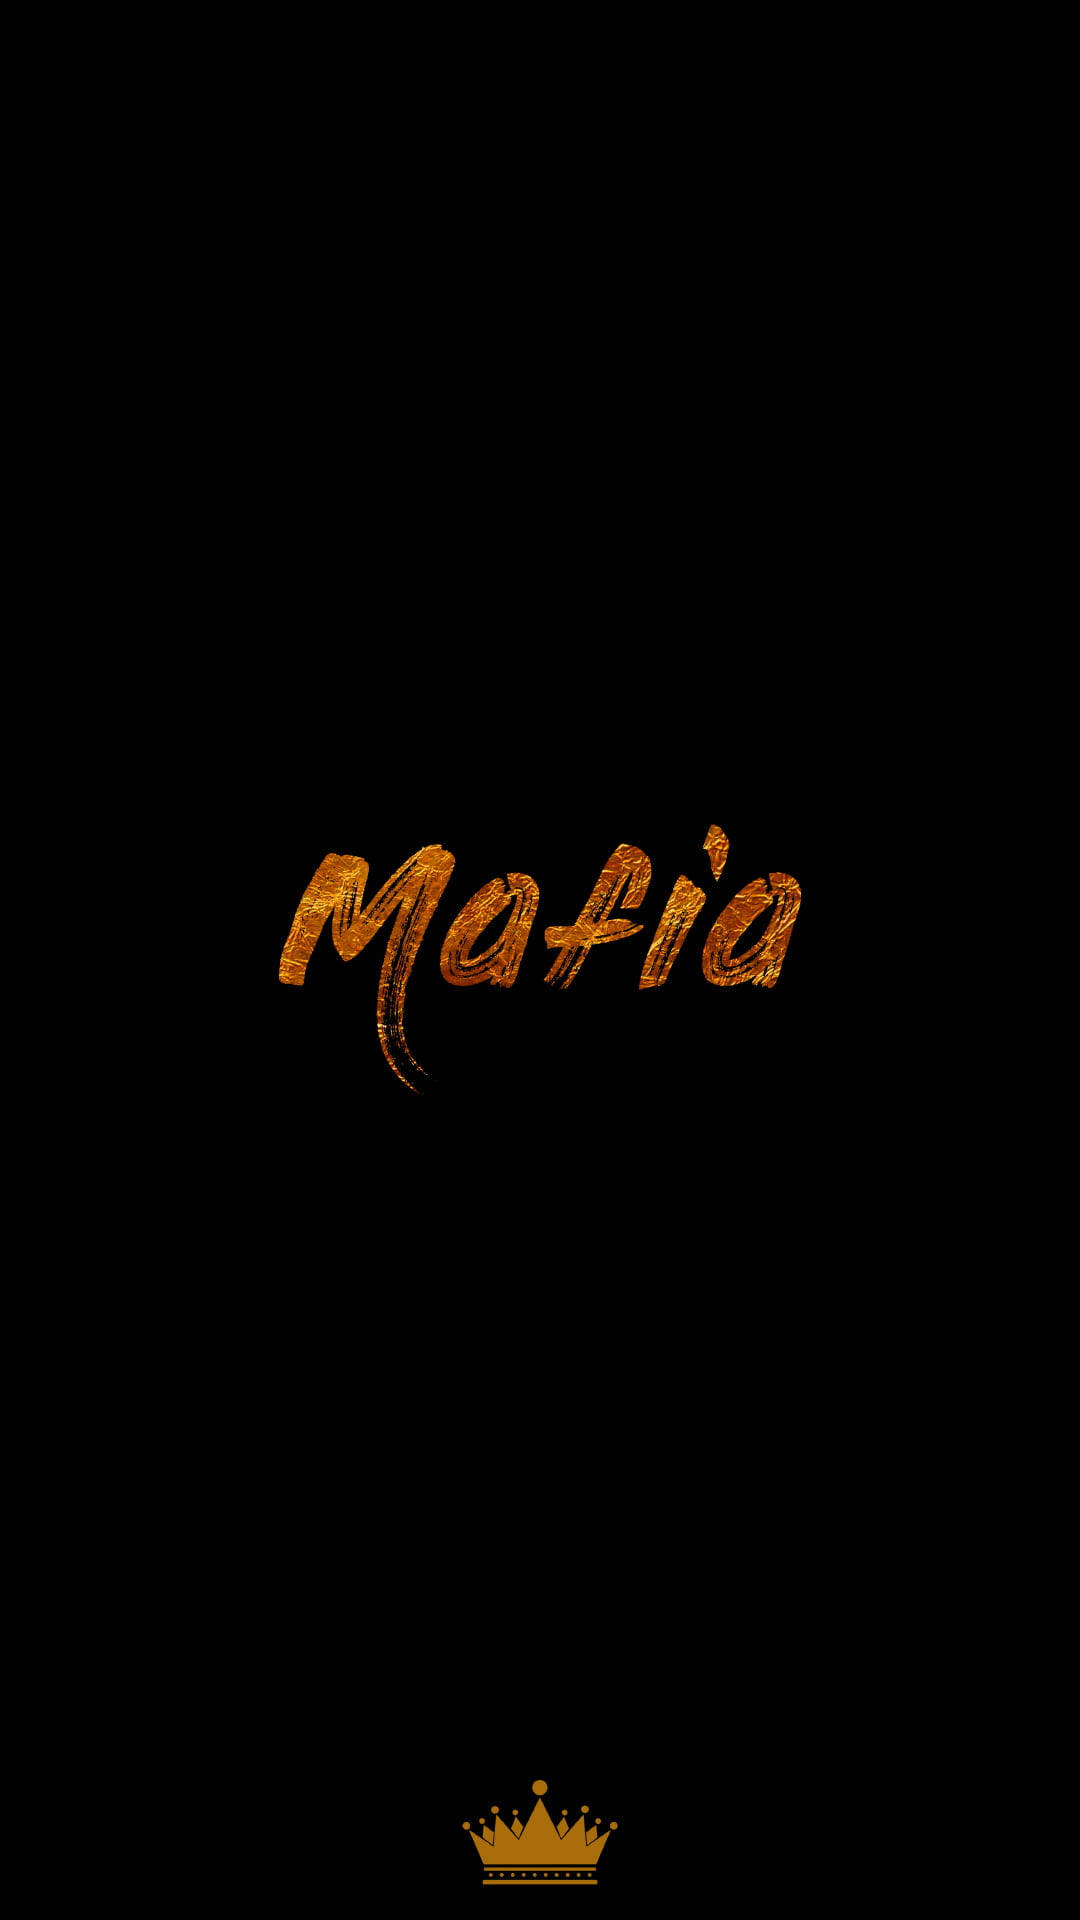 Top 999+ Mafia Wallpaper Full HD, 4K✅Free to Use